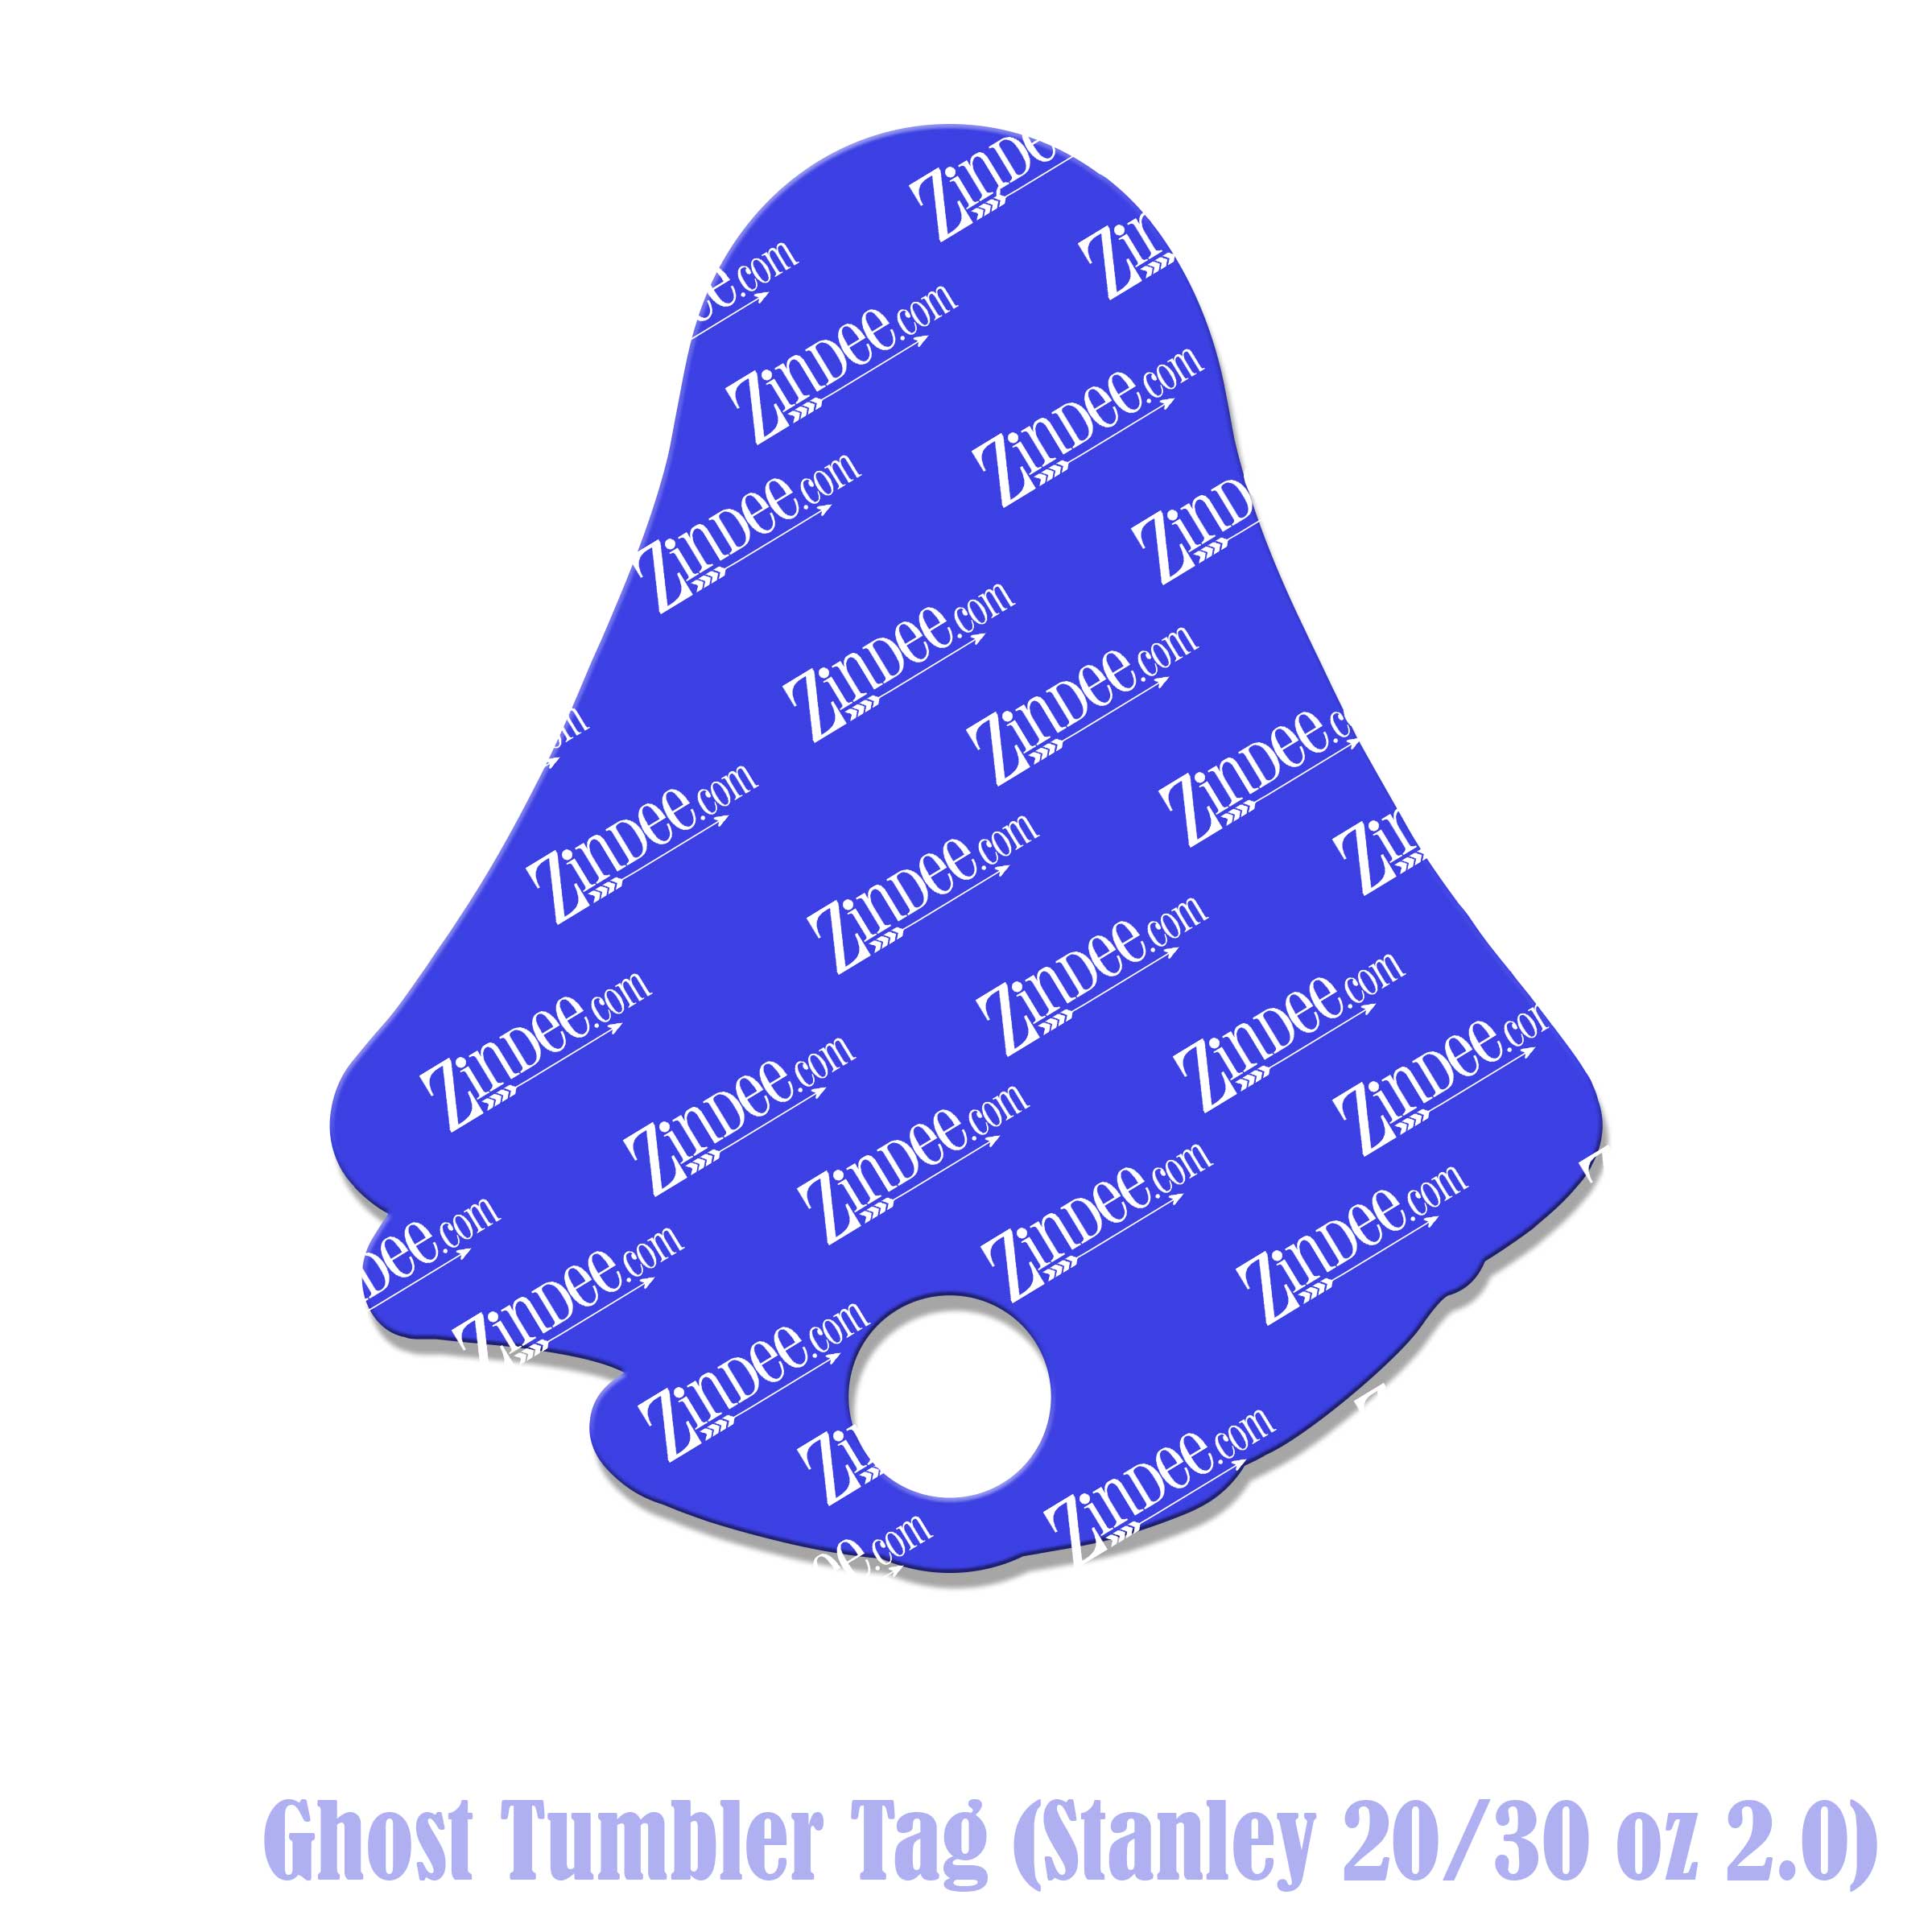 Ghost Tumbler Tag (Stanley 20/30 oz 2.0)